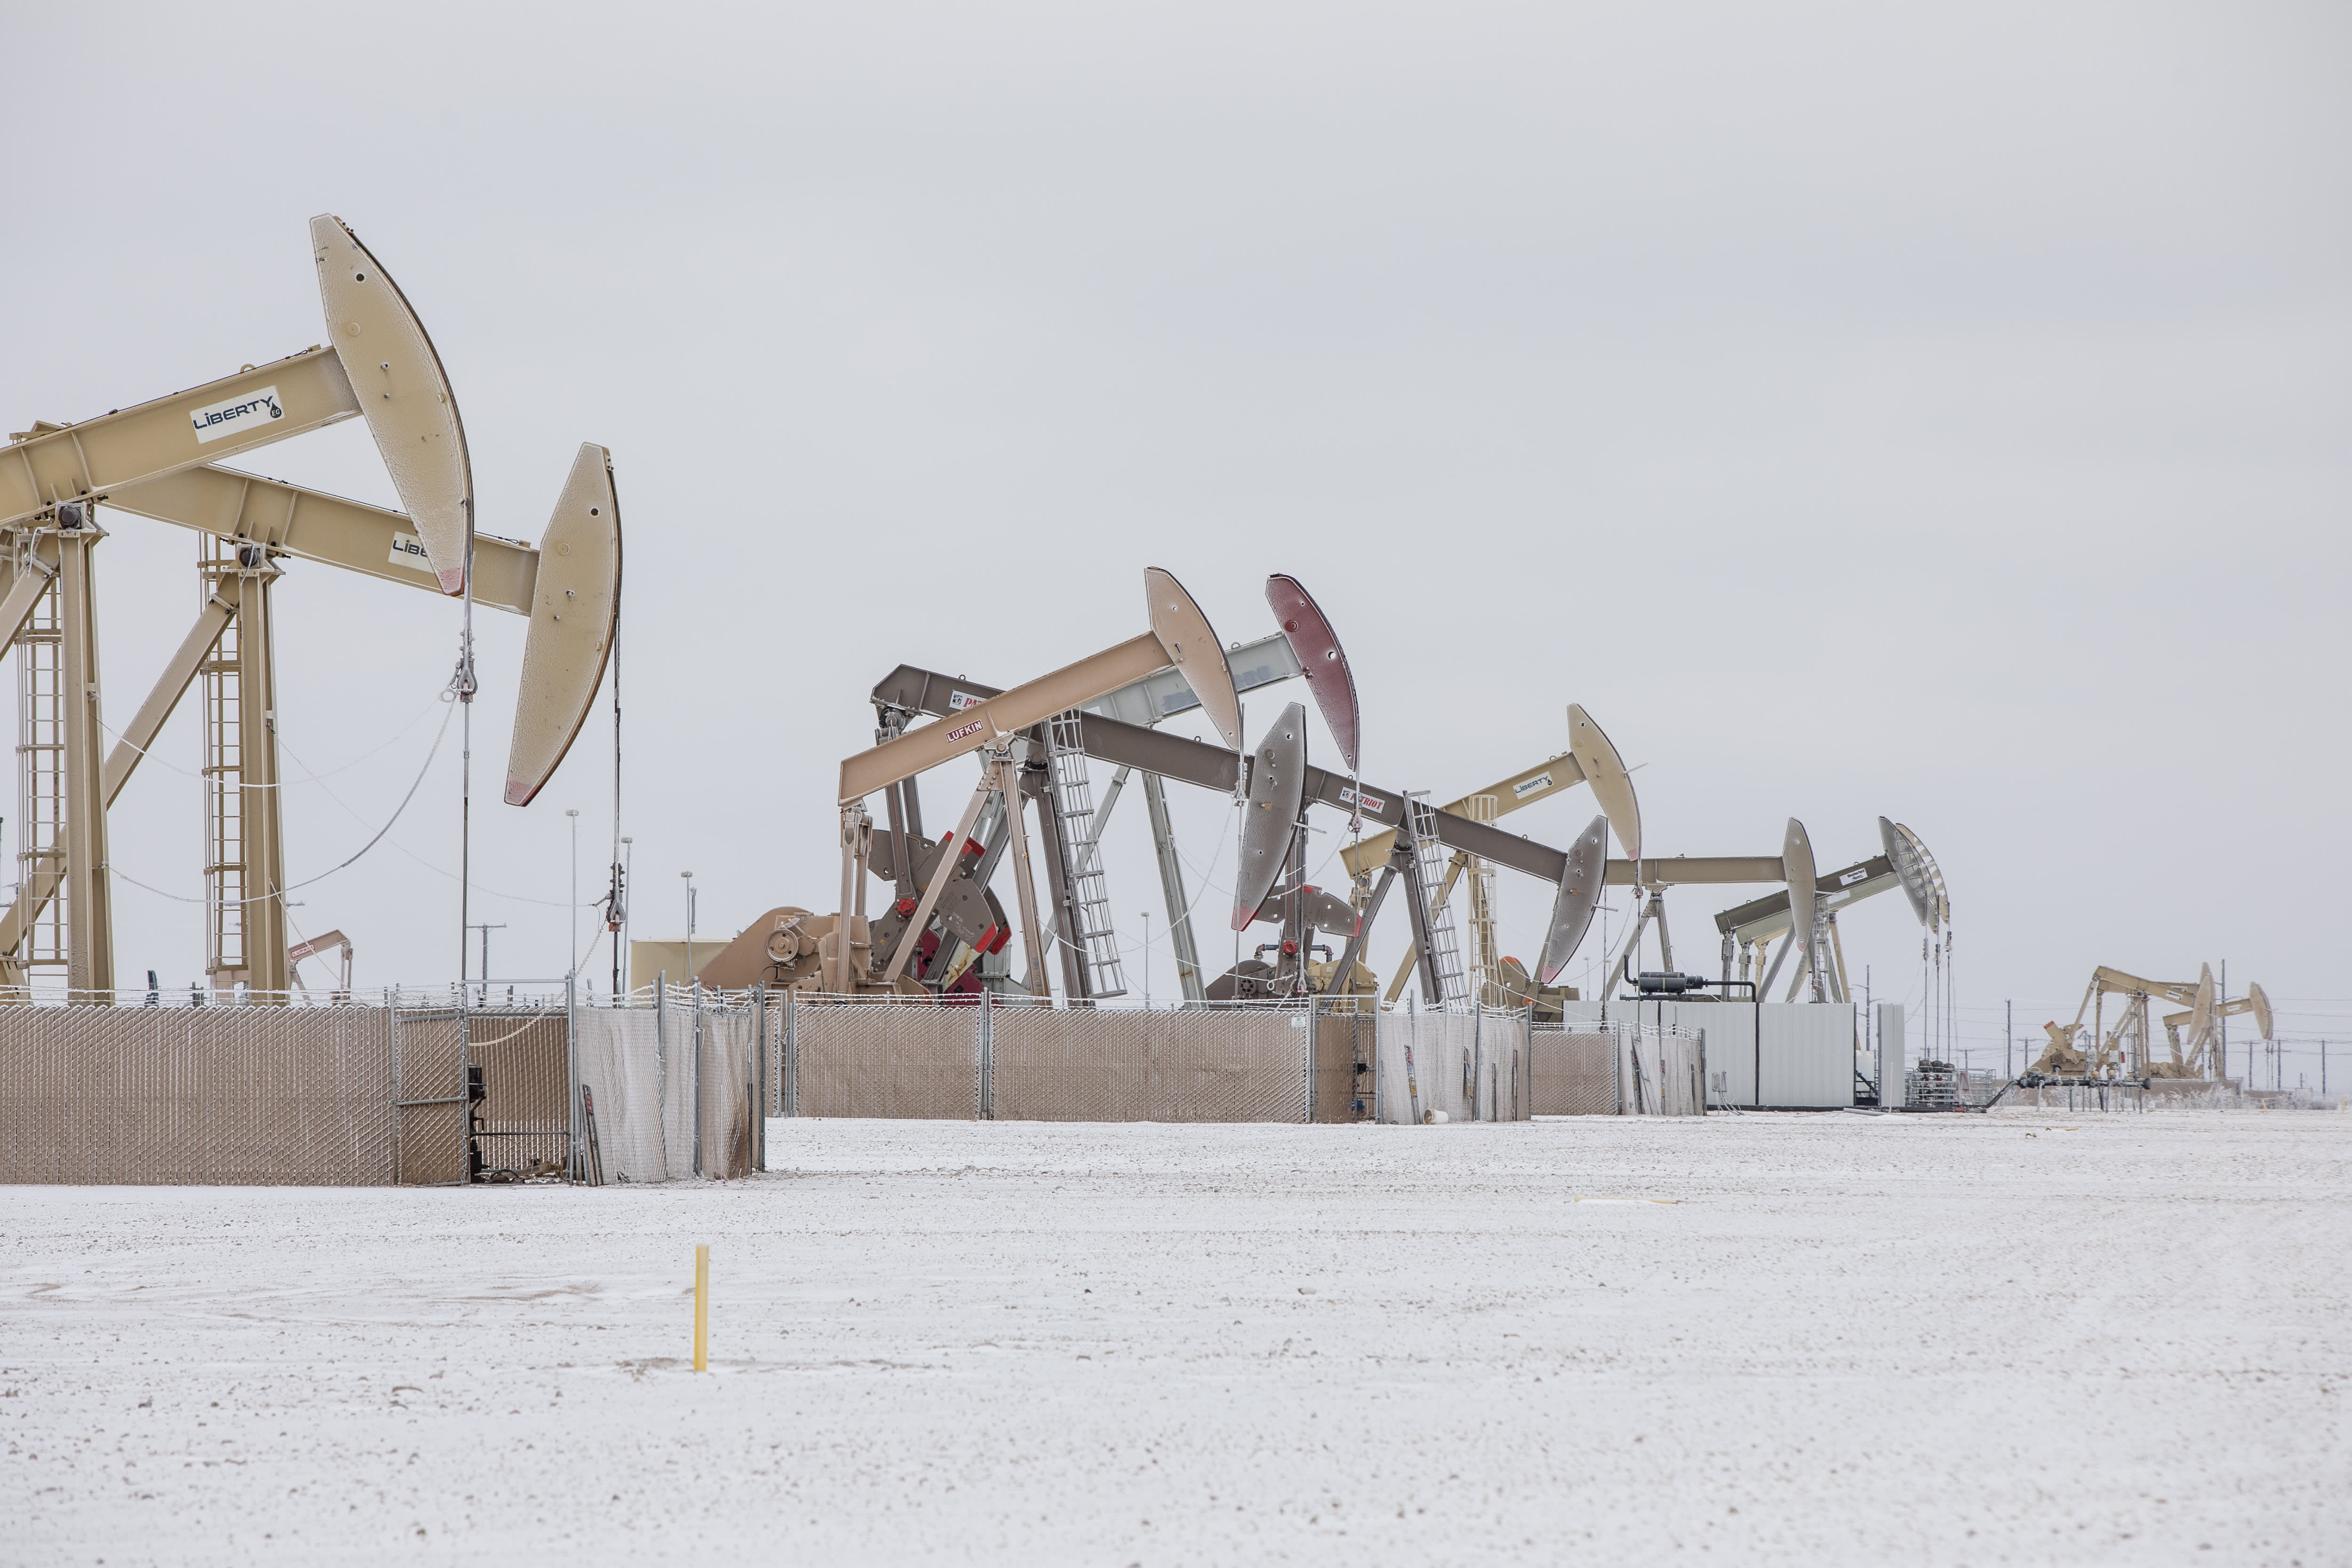 Texas freeze helps rival oil exporters like OPEC members Saudi Arabia